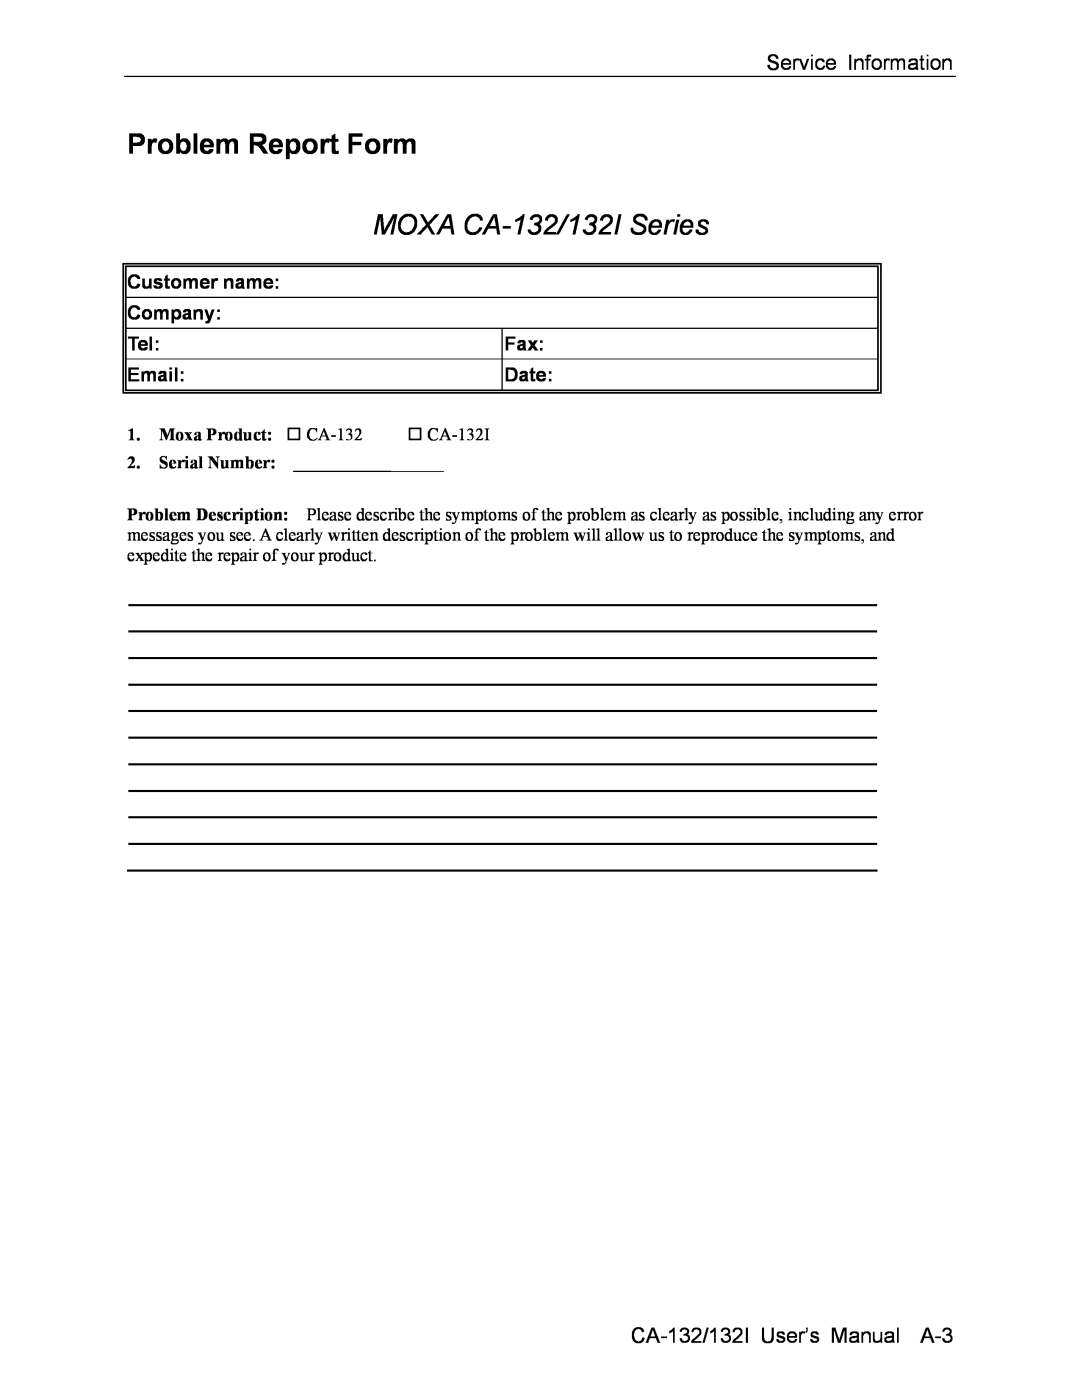 Moxa Technologies Problem Report Form, Service Information, CA-132/132I User’s Manual A-3, MOXA CA-132/132I Series 